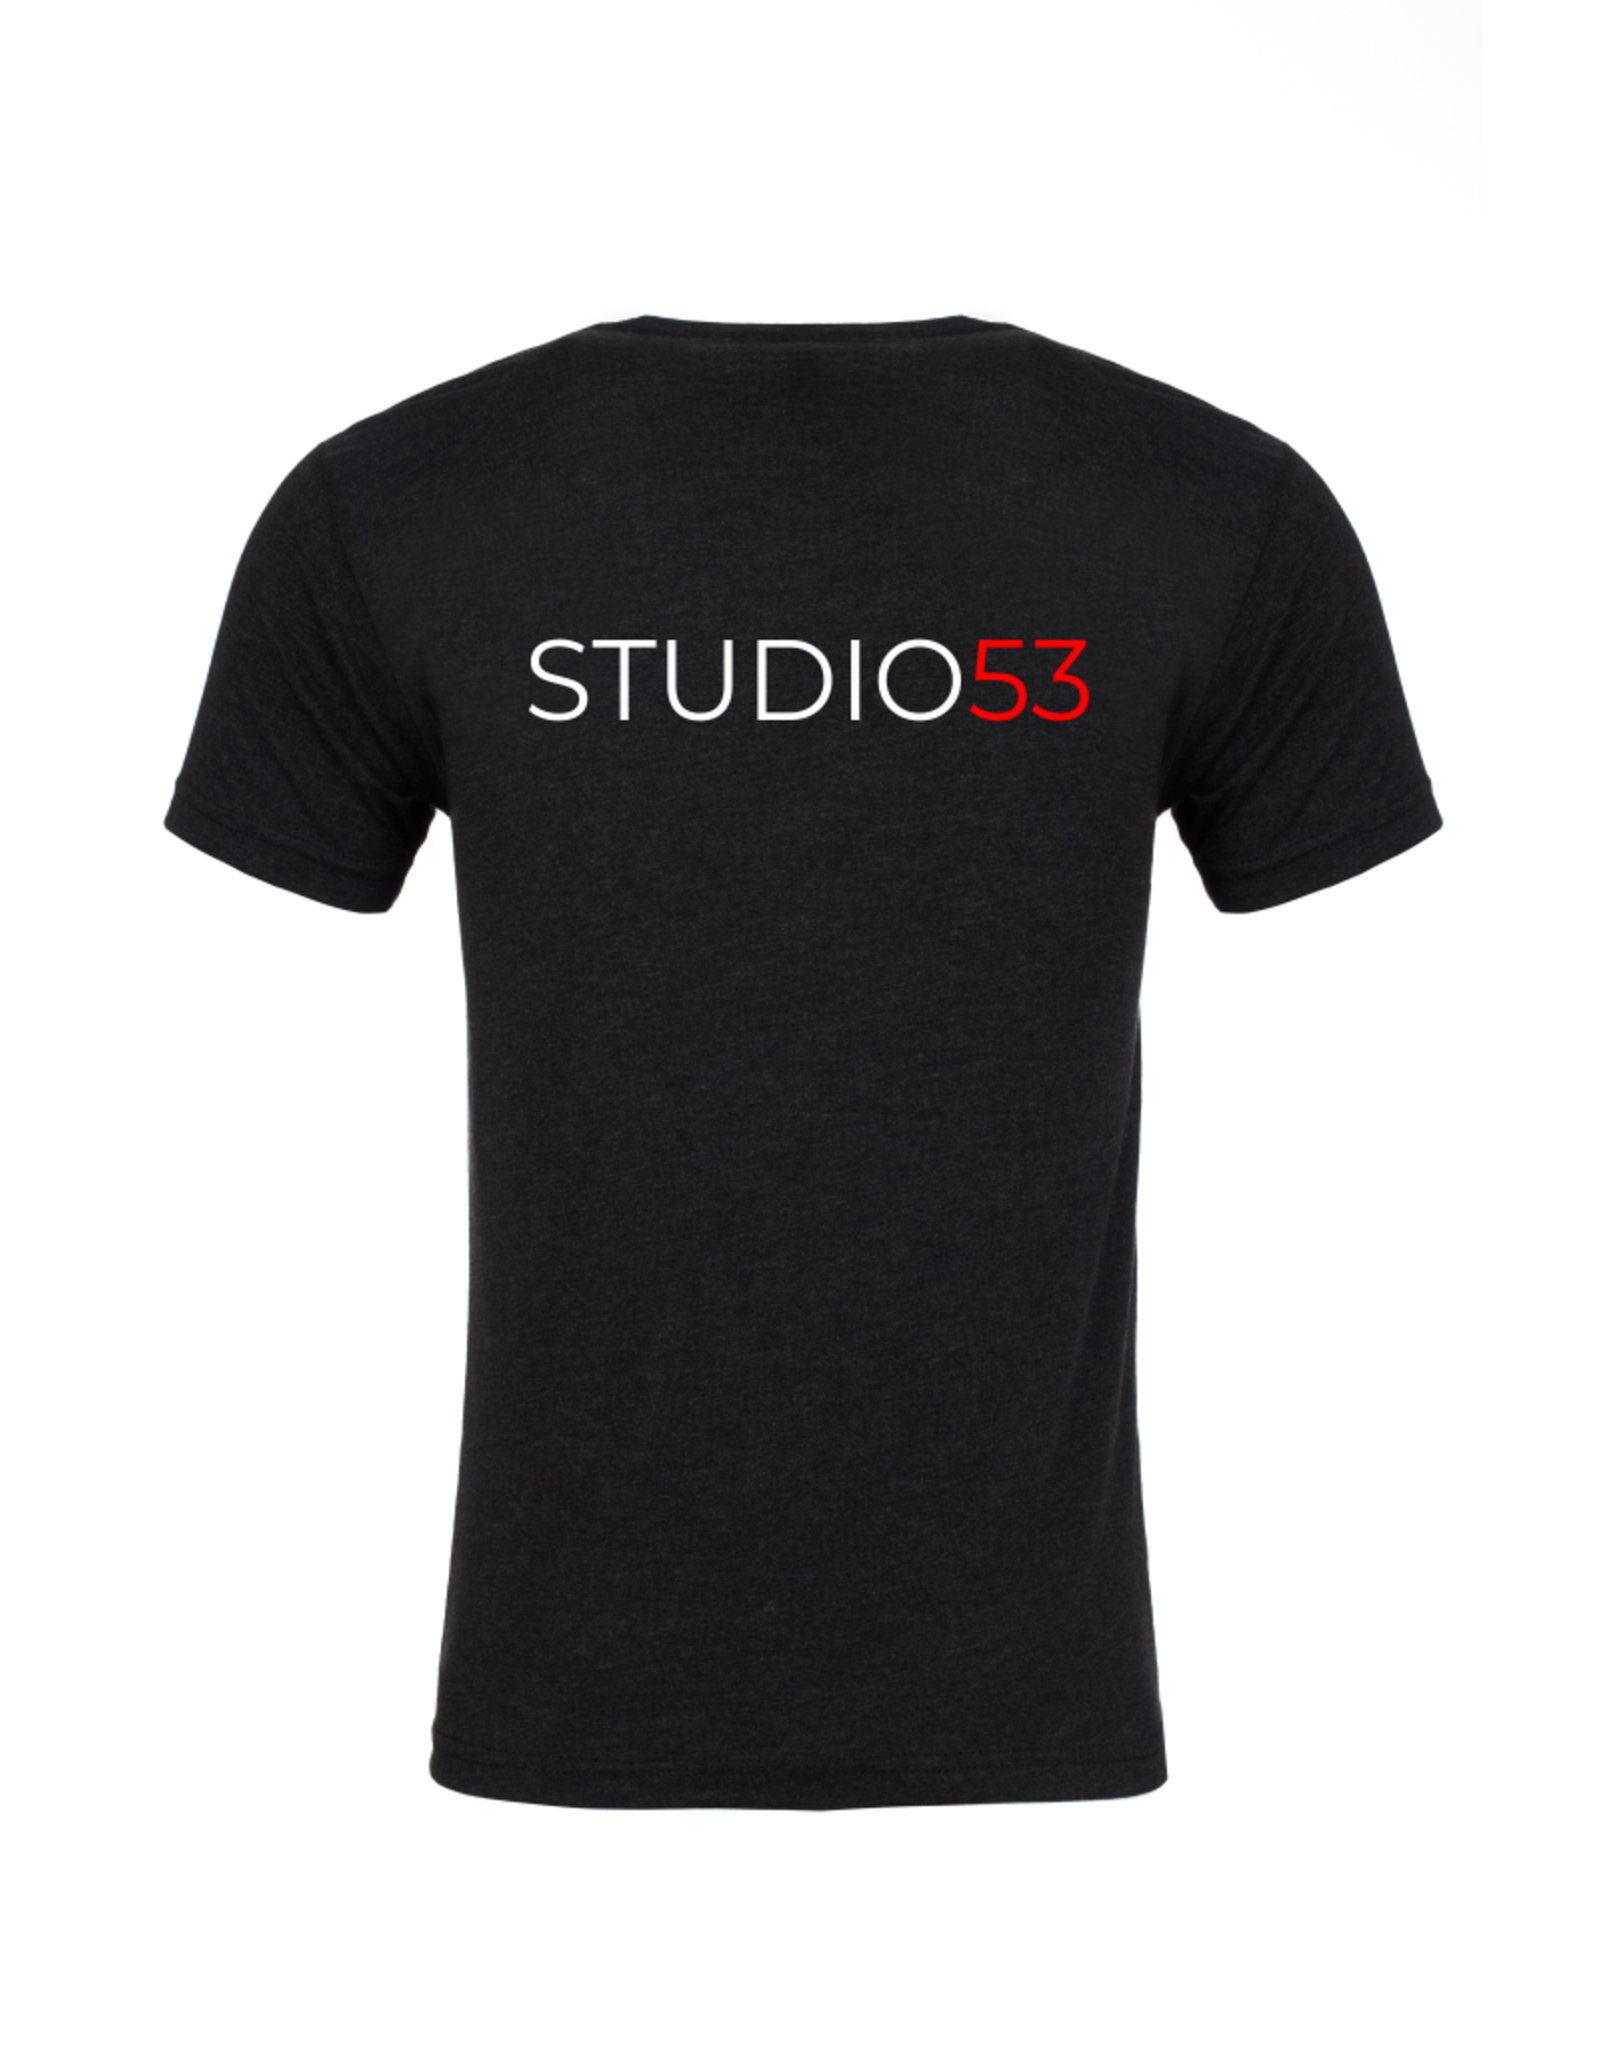 Next Level Apparel Studio 53 T-Shirt